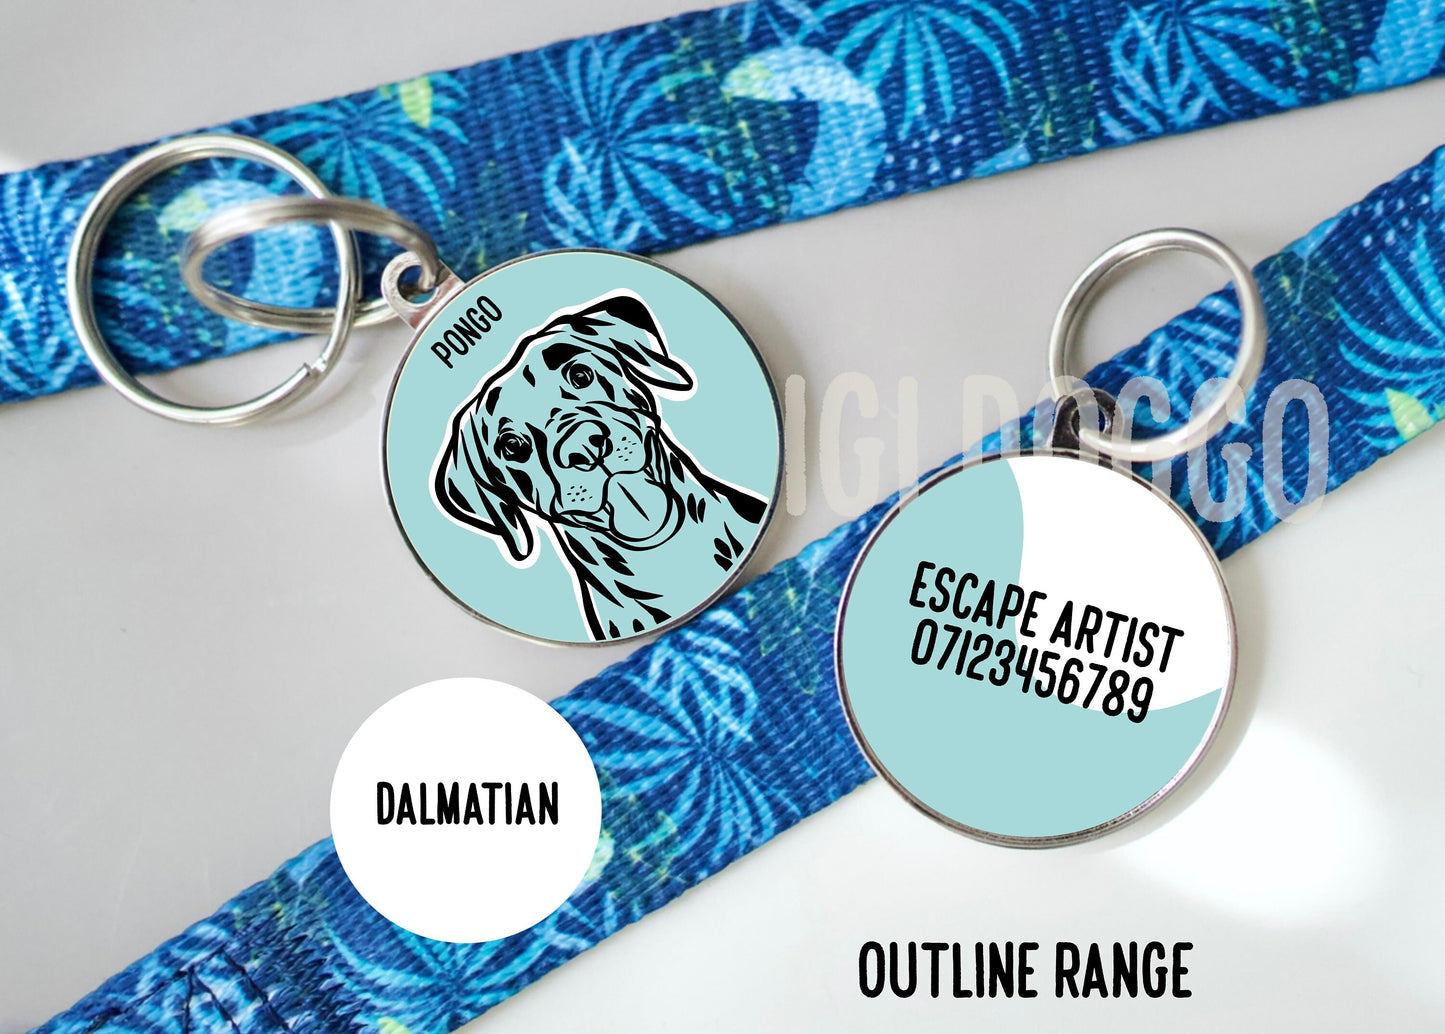 Dalmatian Outline ID Tag/ Dog Breed Line Drawing Collar Tag/ Trendy Pet Charm/ Customised Dalmatian Portrait Tag/ Pet Keepsake Gift